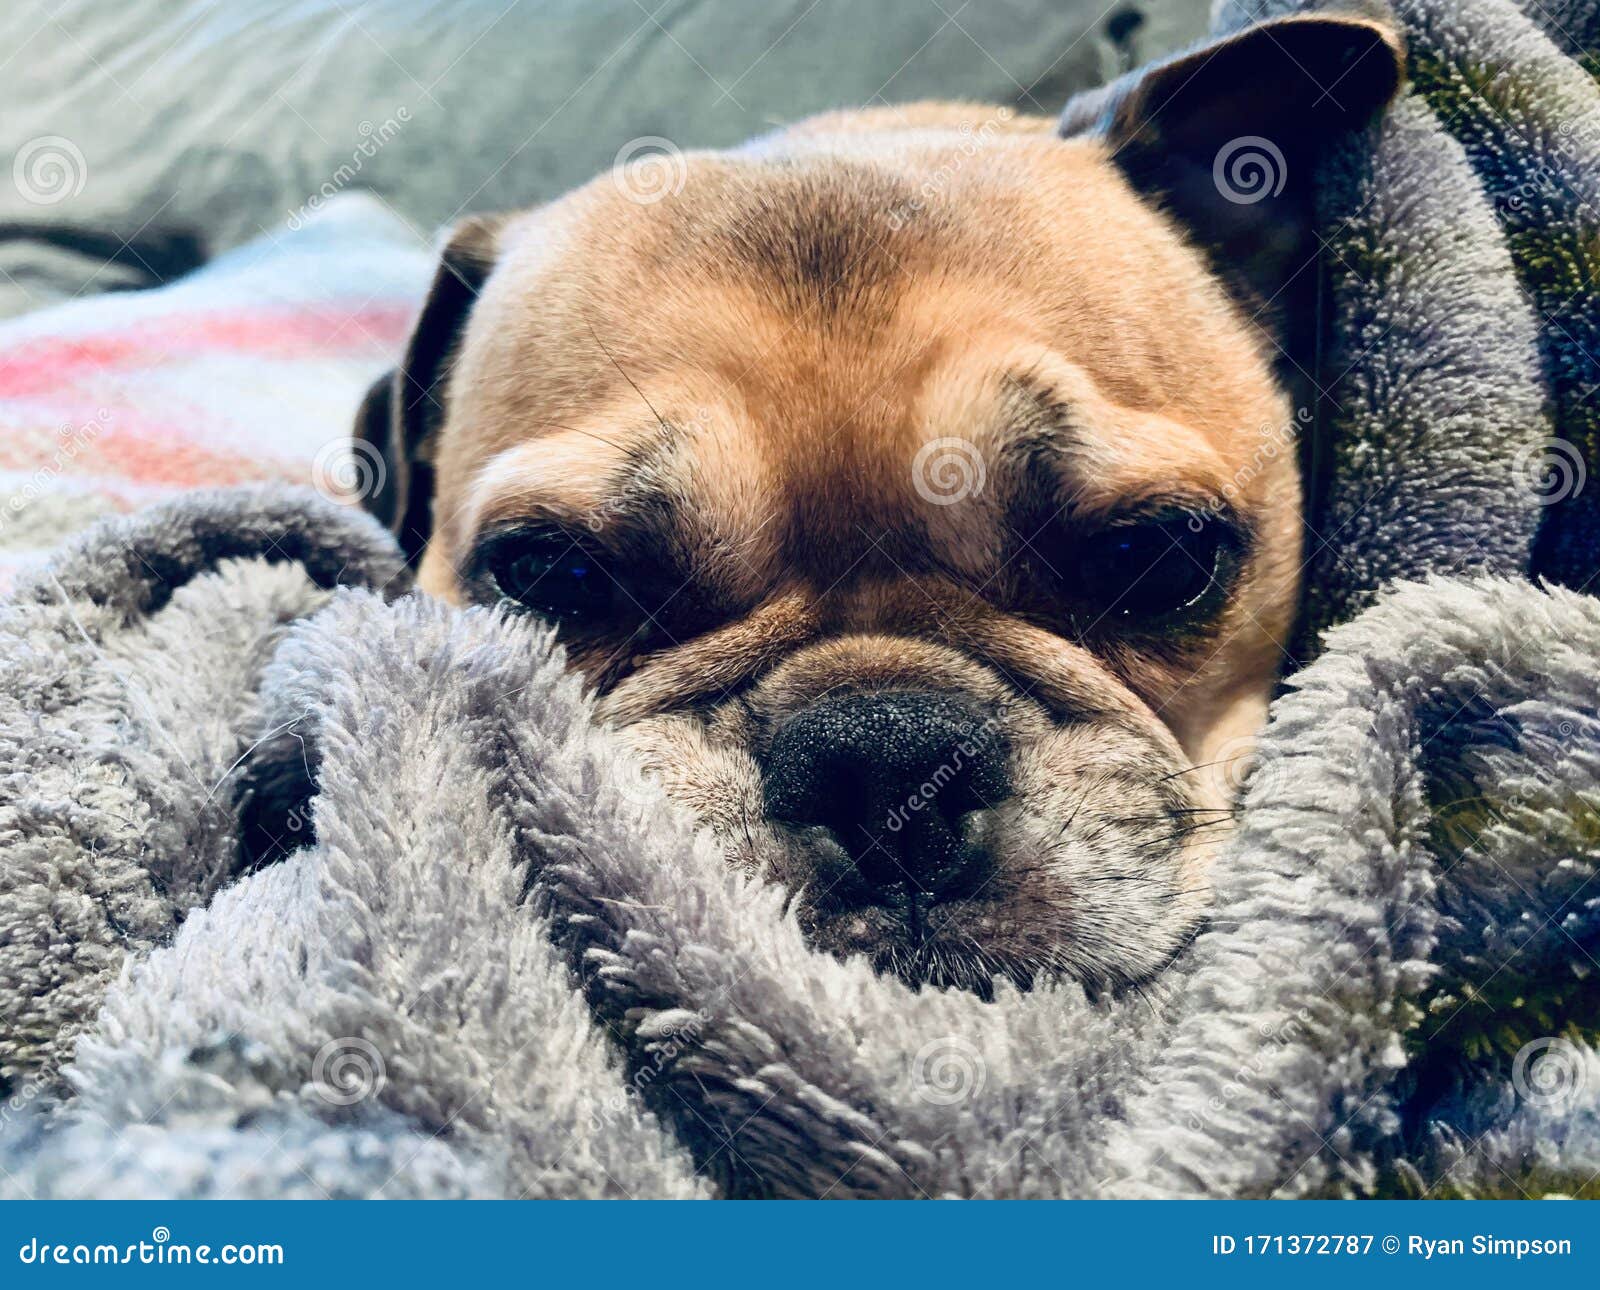 pug dog snug on blanket close up